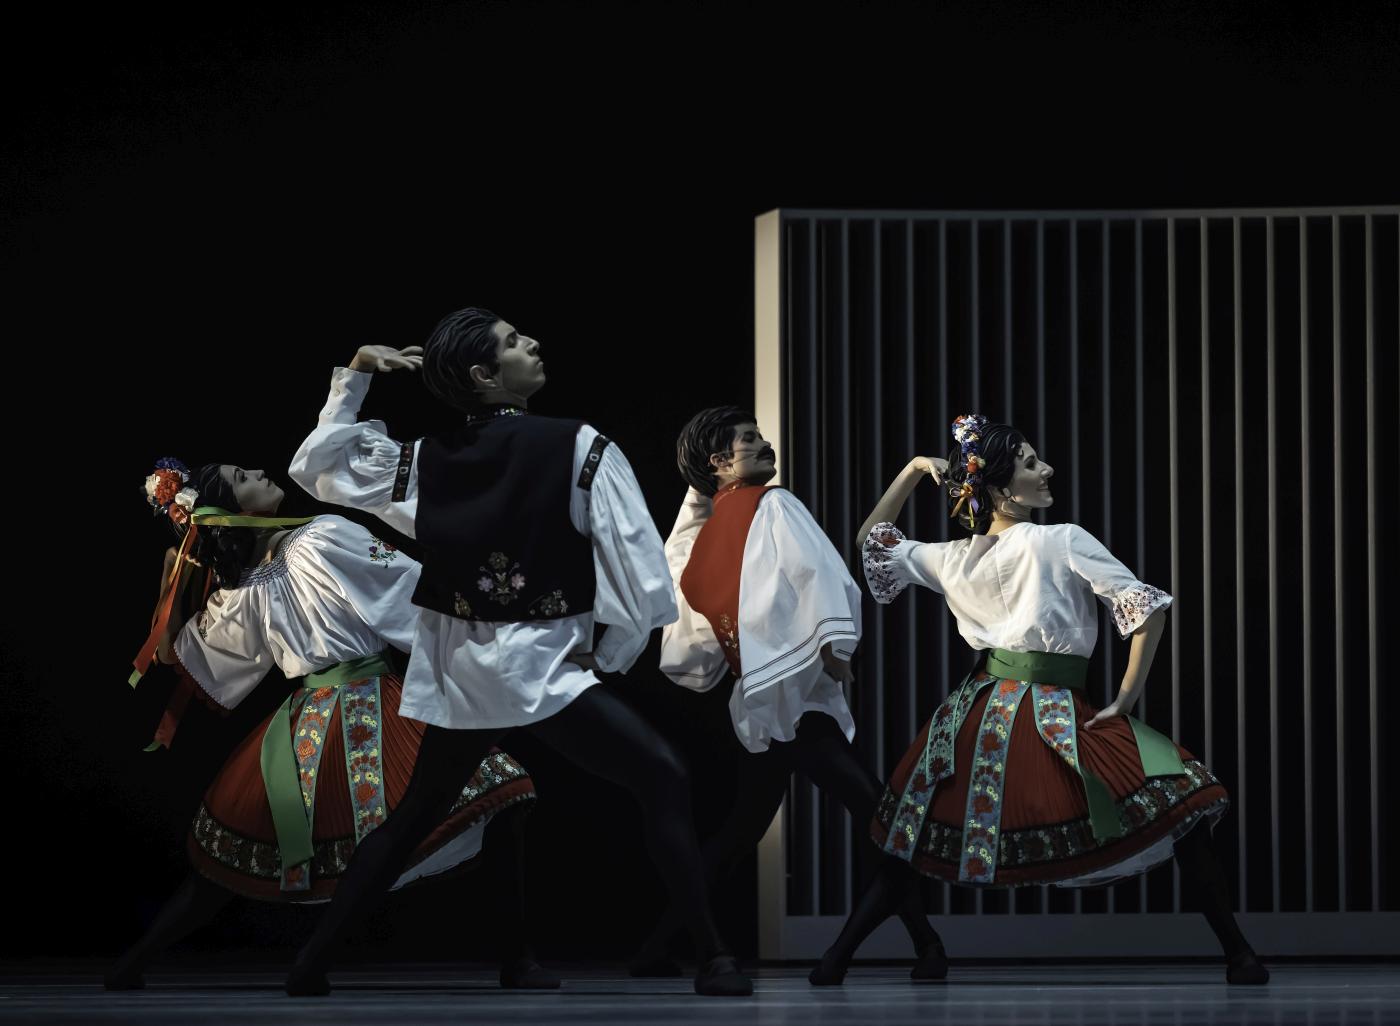 7. S.Santoro, M.Carrada Palmeros, V.Lamparter, and J.Laudadio (Hungarians), “A Swan Lake” by J.Inger, Semperoper Ballet 2023 © Semperoper Dresden/N.MacKay 